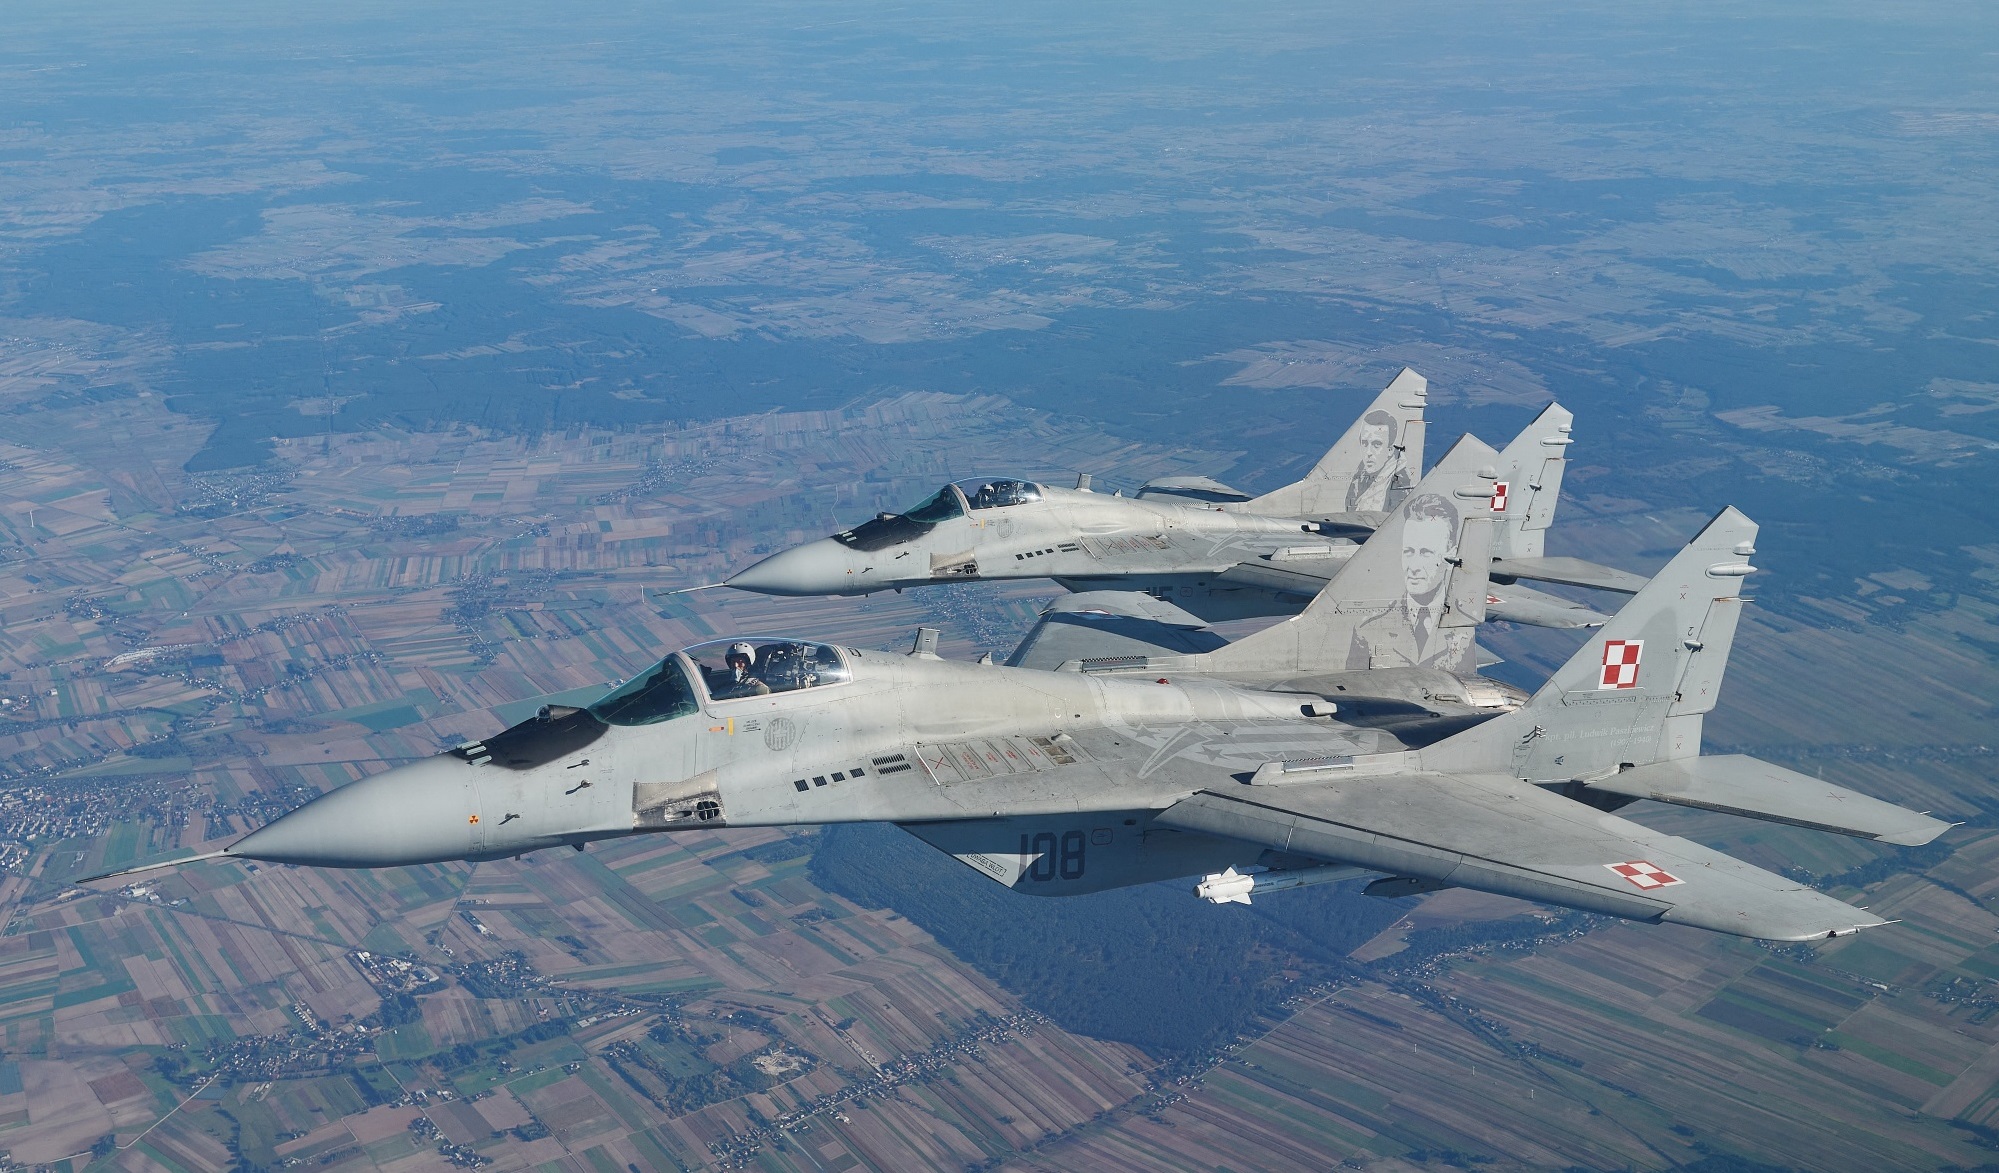 Poland transfers 14 Soviet-era MiG-29 multirole fighters to Ukraine